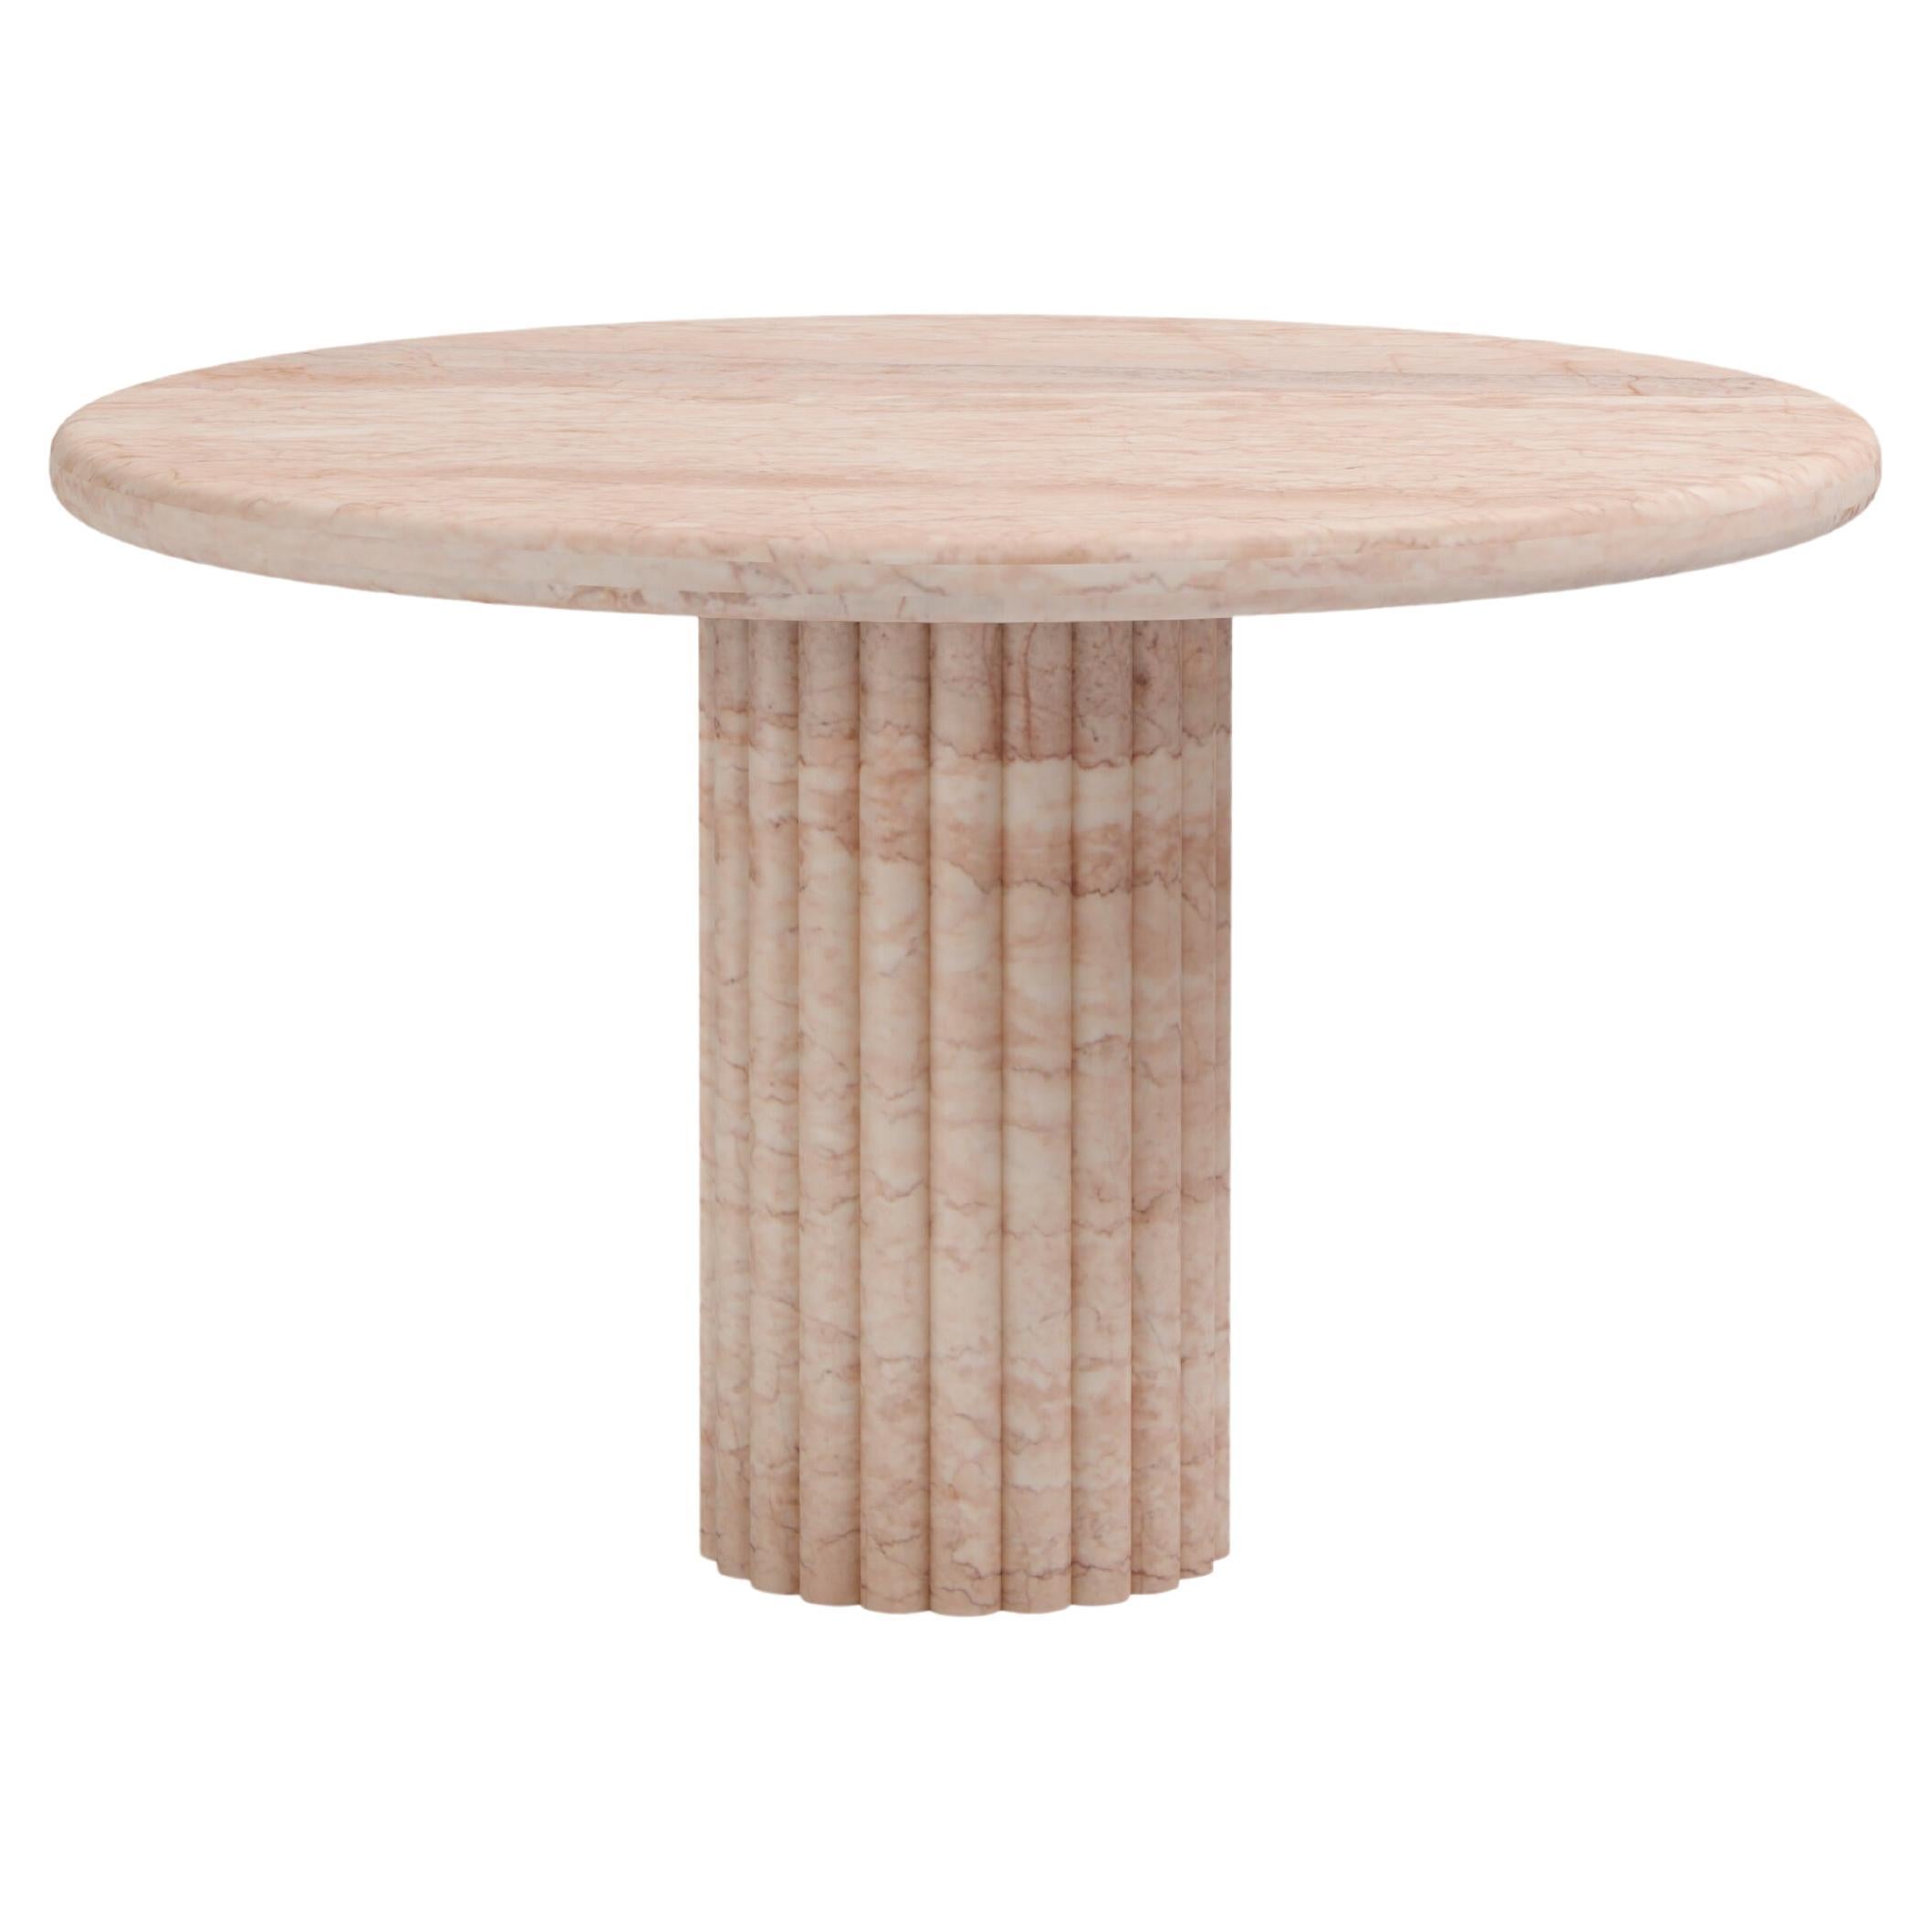 FORM(LA) Fluta Round Dining Table 42”L x 42”W x 30”H Rosa Crema Marble For Sale